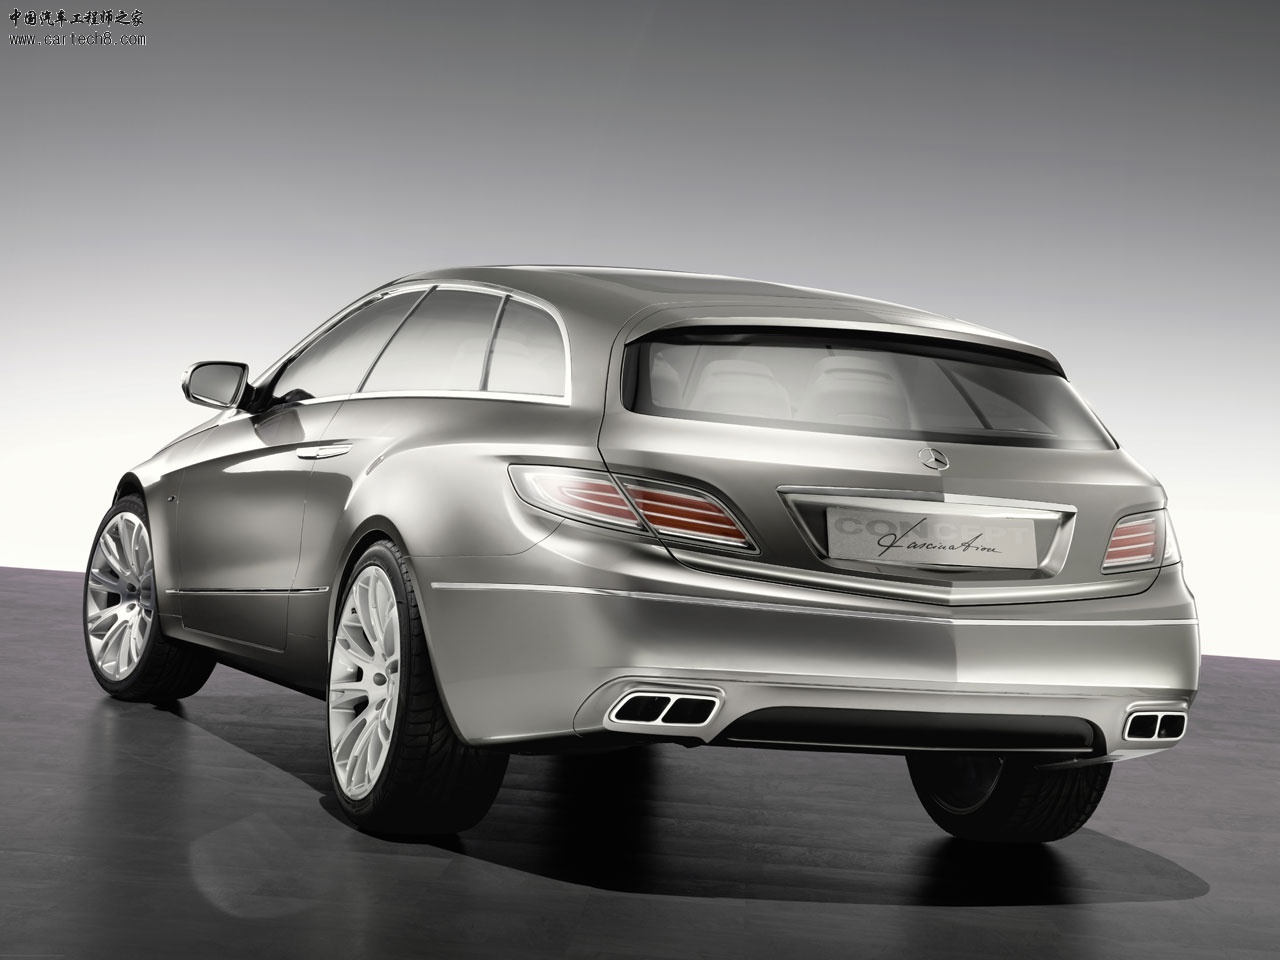 Mercedes-Benz-Concept-Fascination-05-lg.jpg